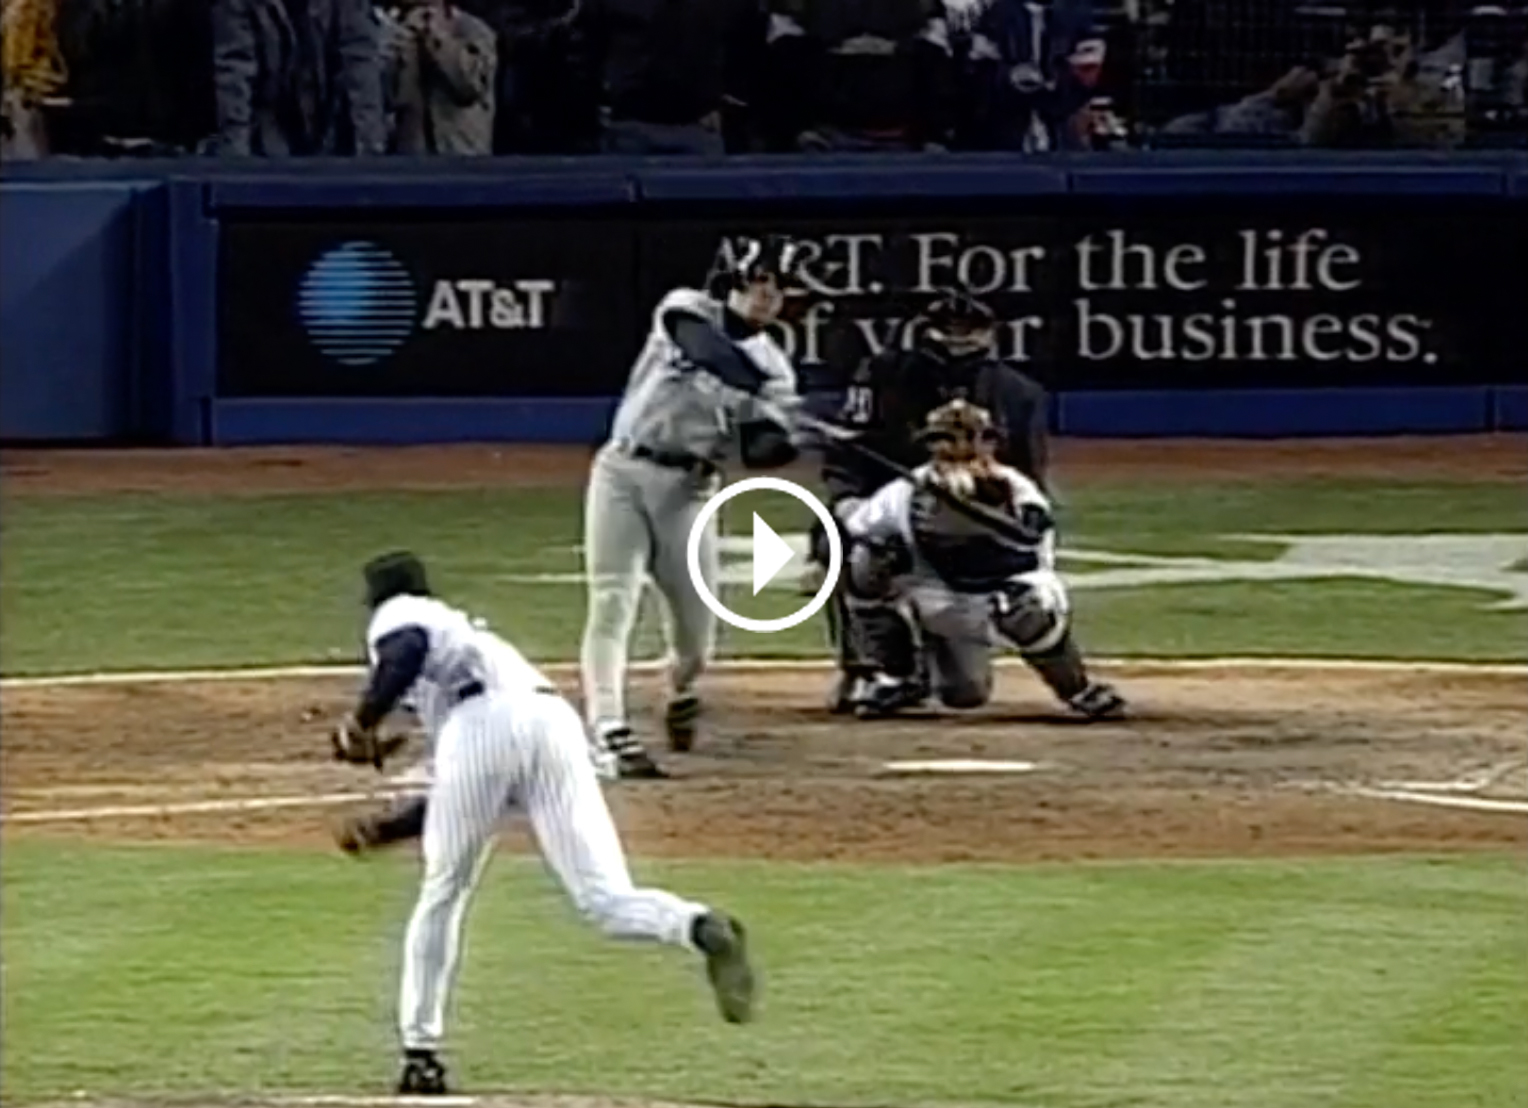 Video of Dwight Gooden's no-hitter